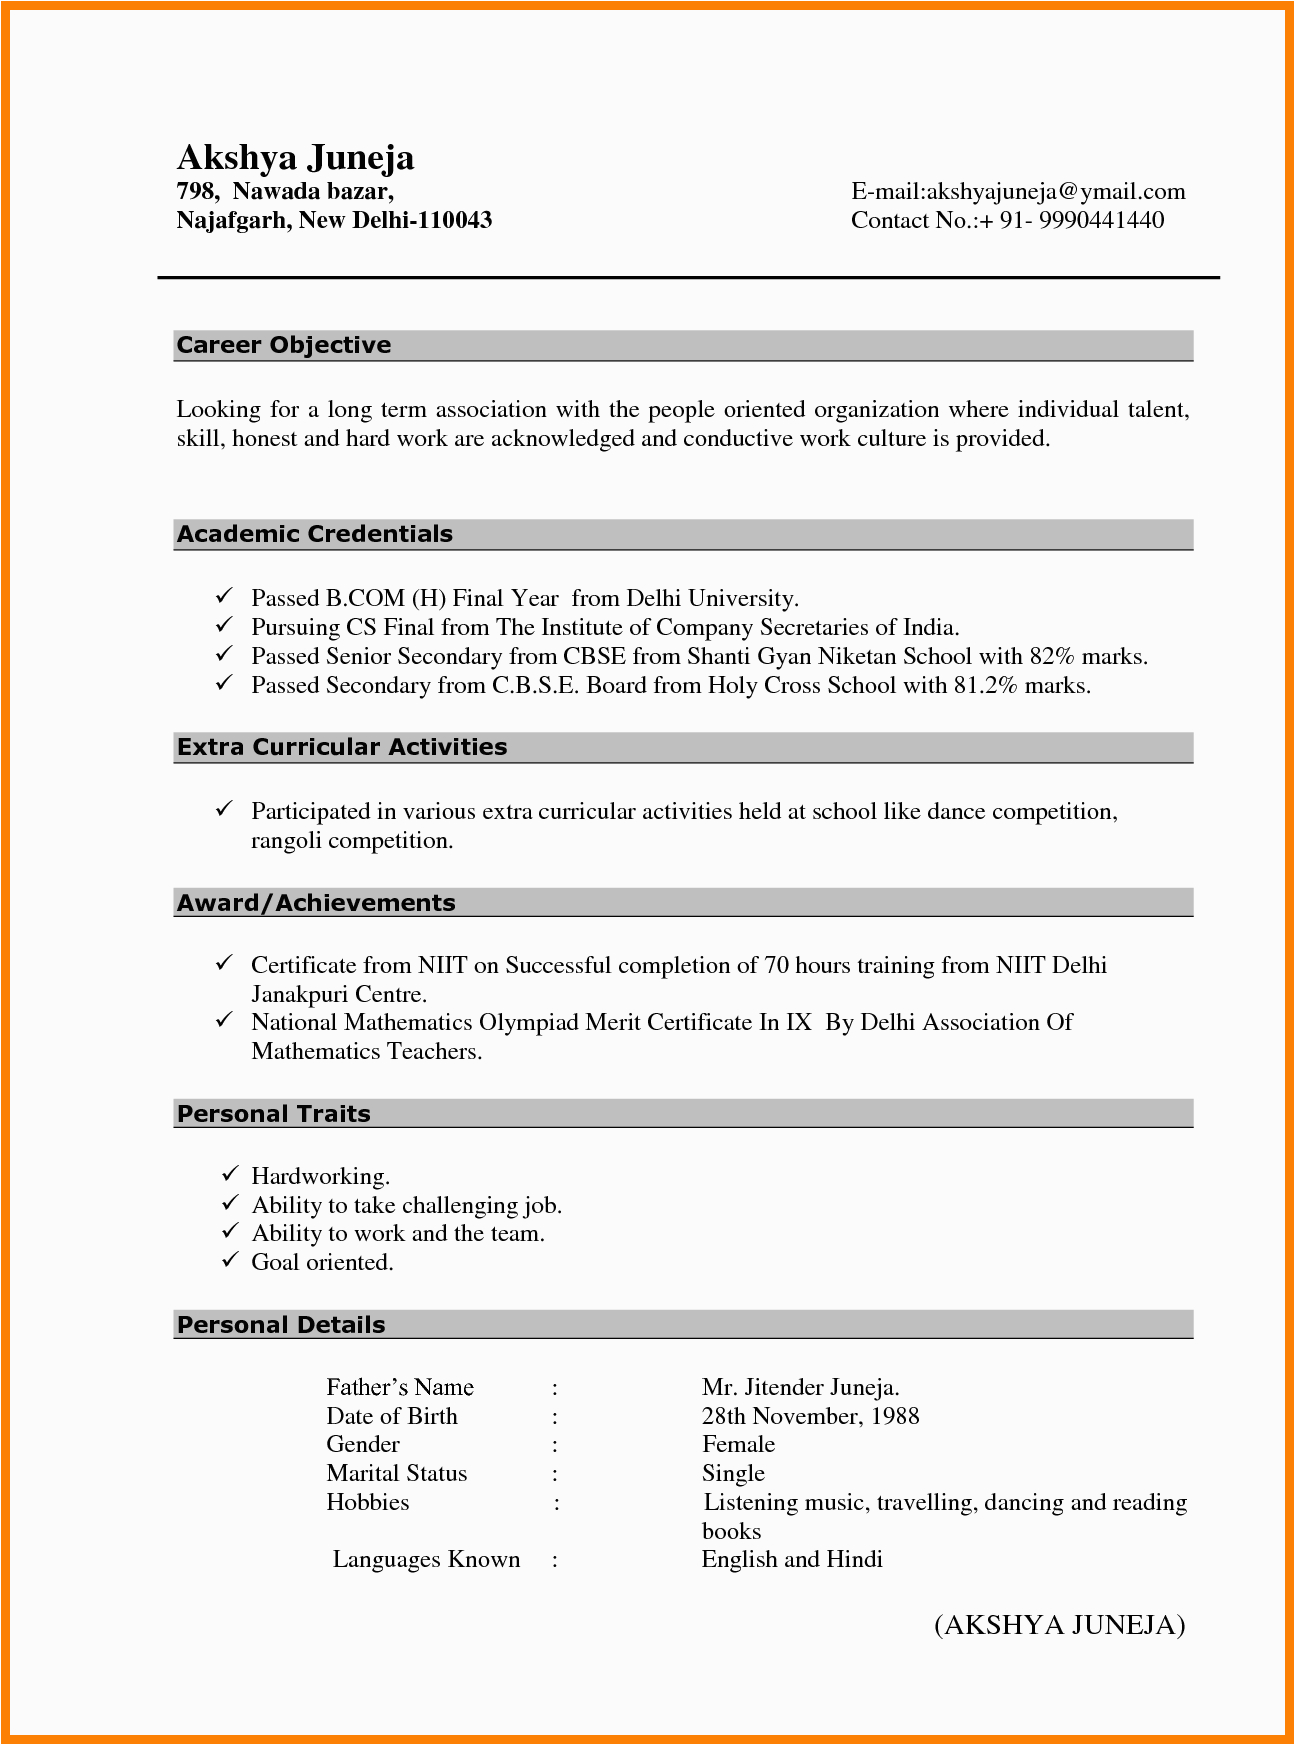 Sample Resume for Freshers Bcom Graduate Freshers B Cv format